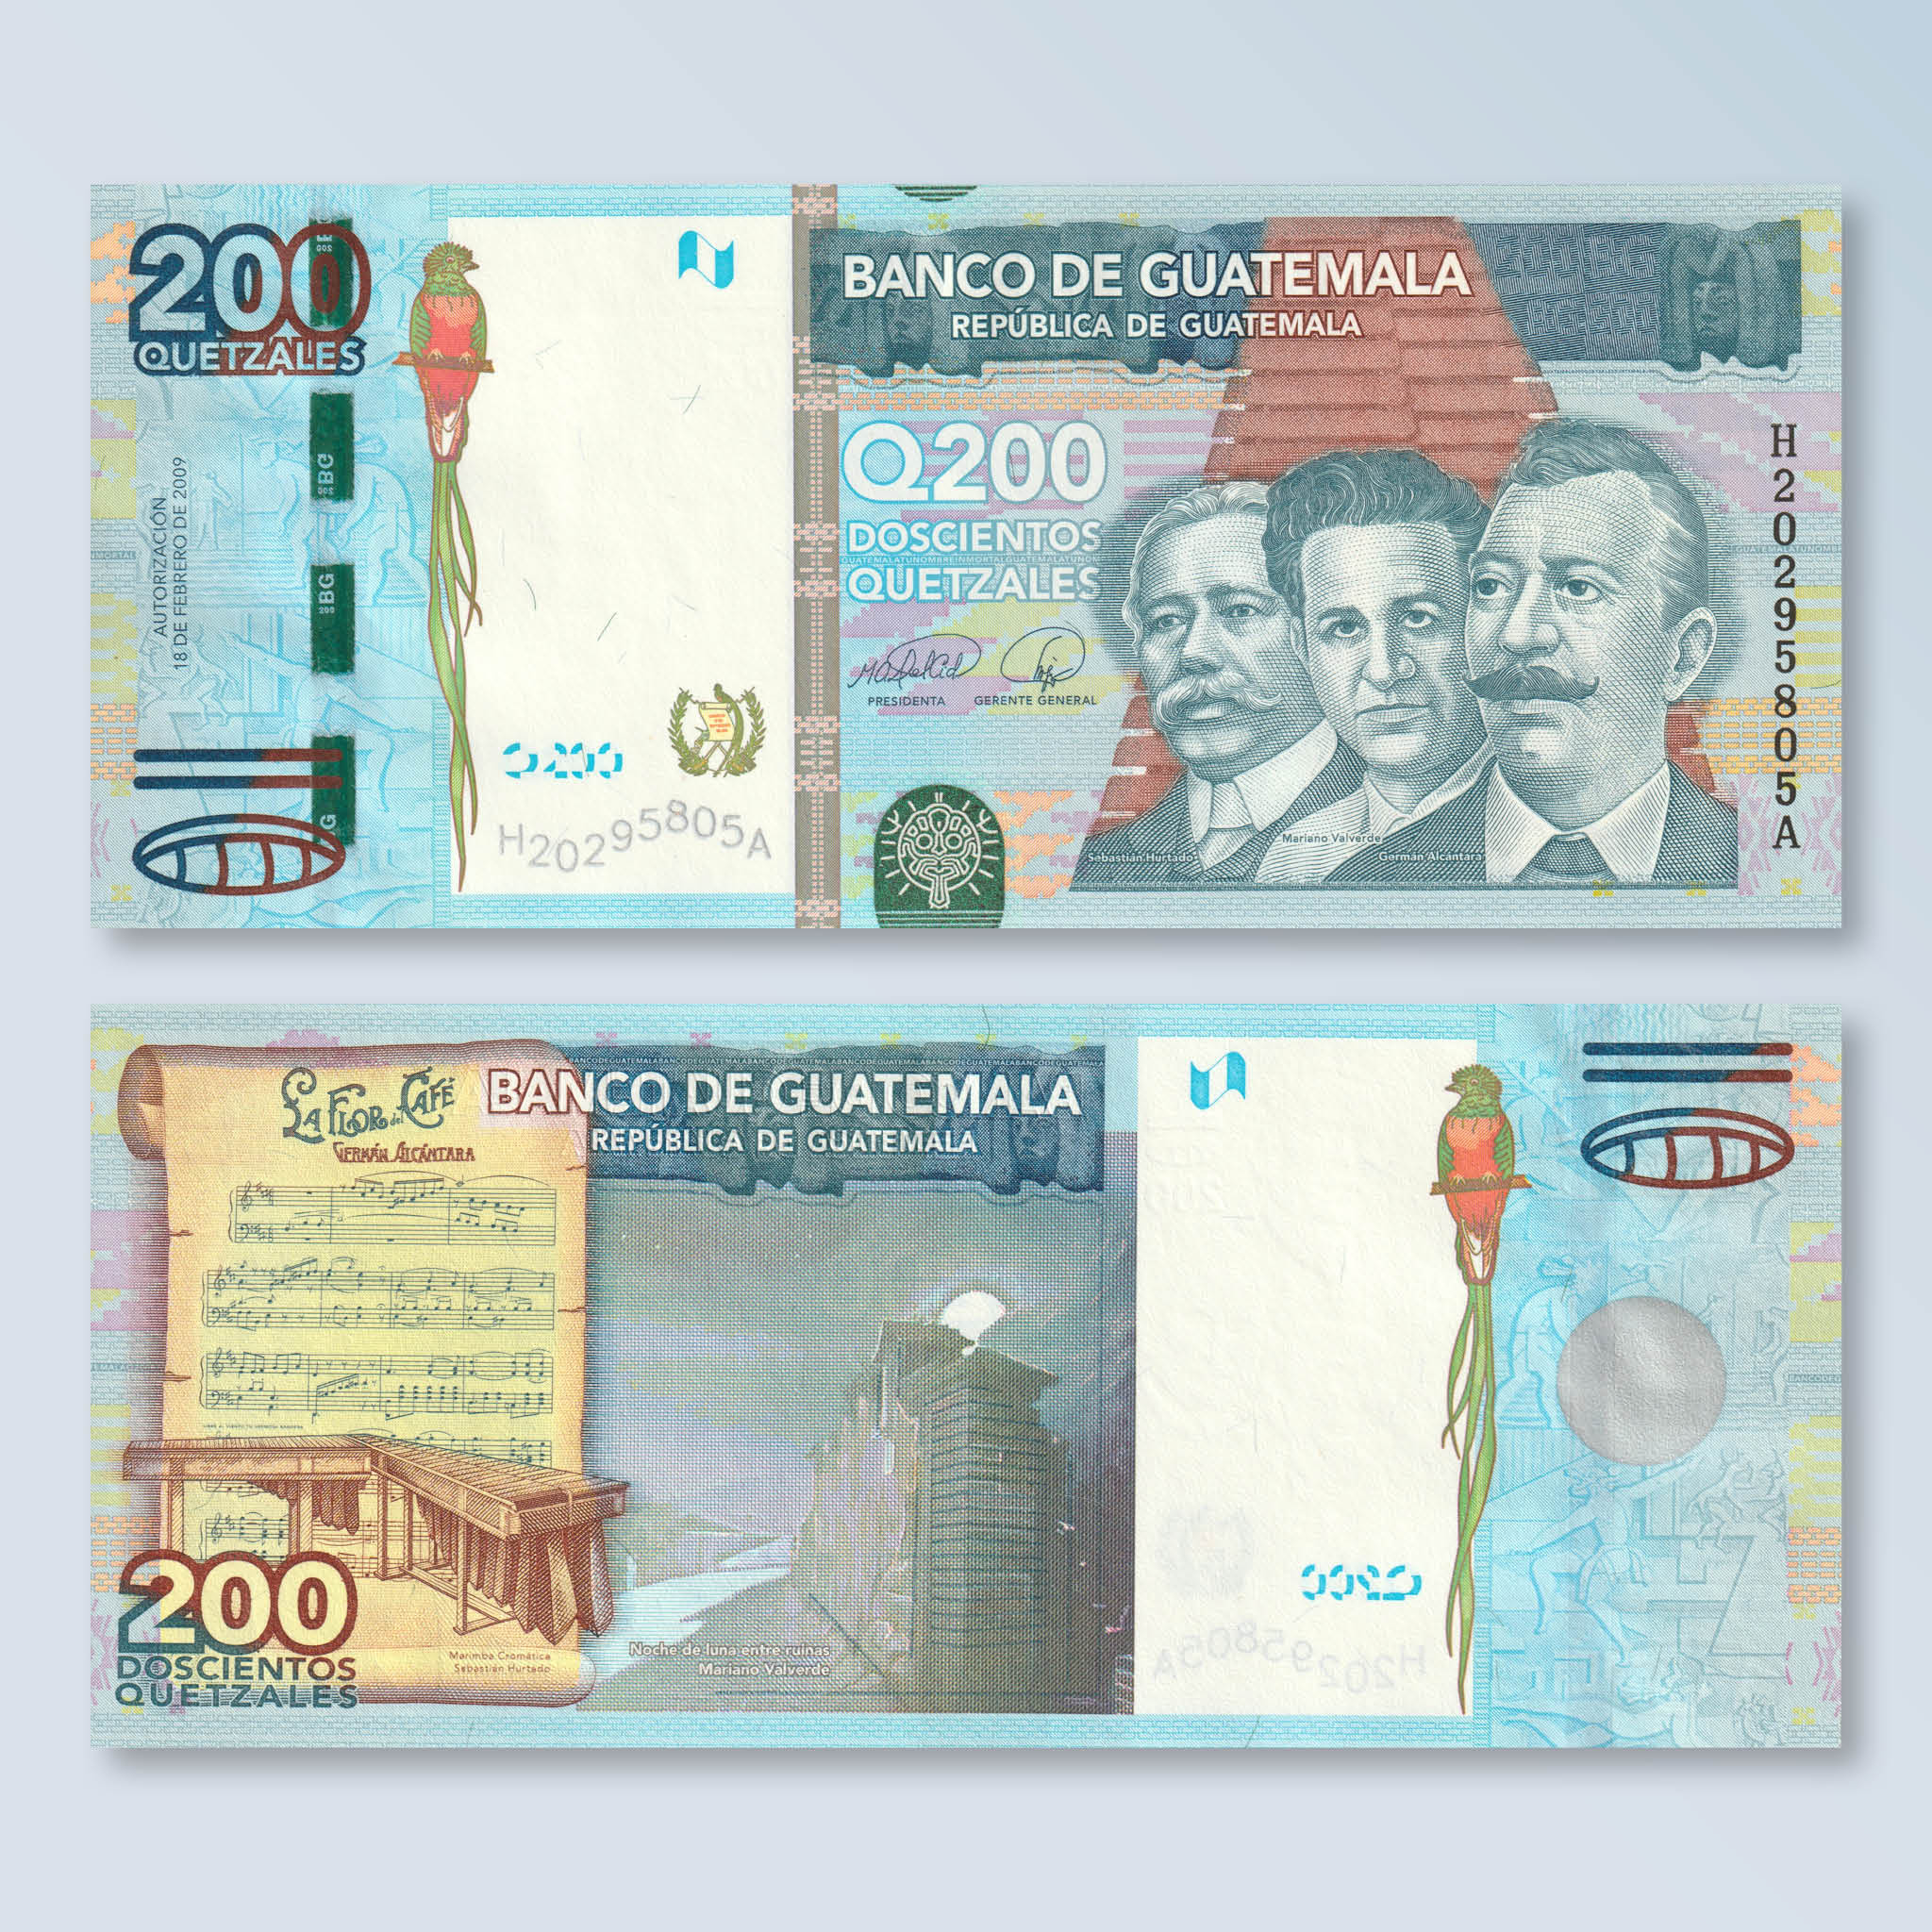 Guatemala 200 Quetzales, 2009, B602a, P120, UNC - Robert's World Money - World Banknotes